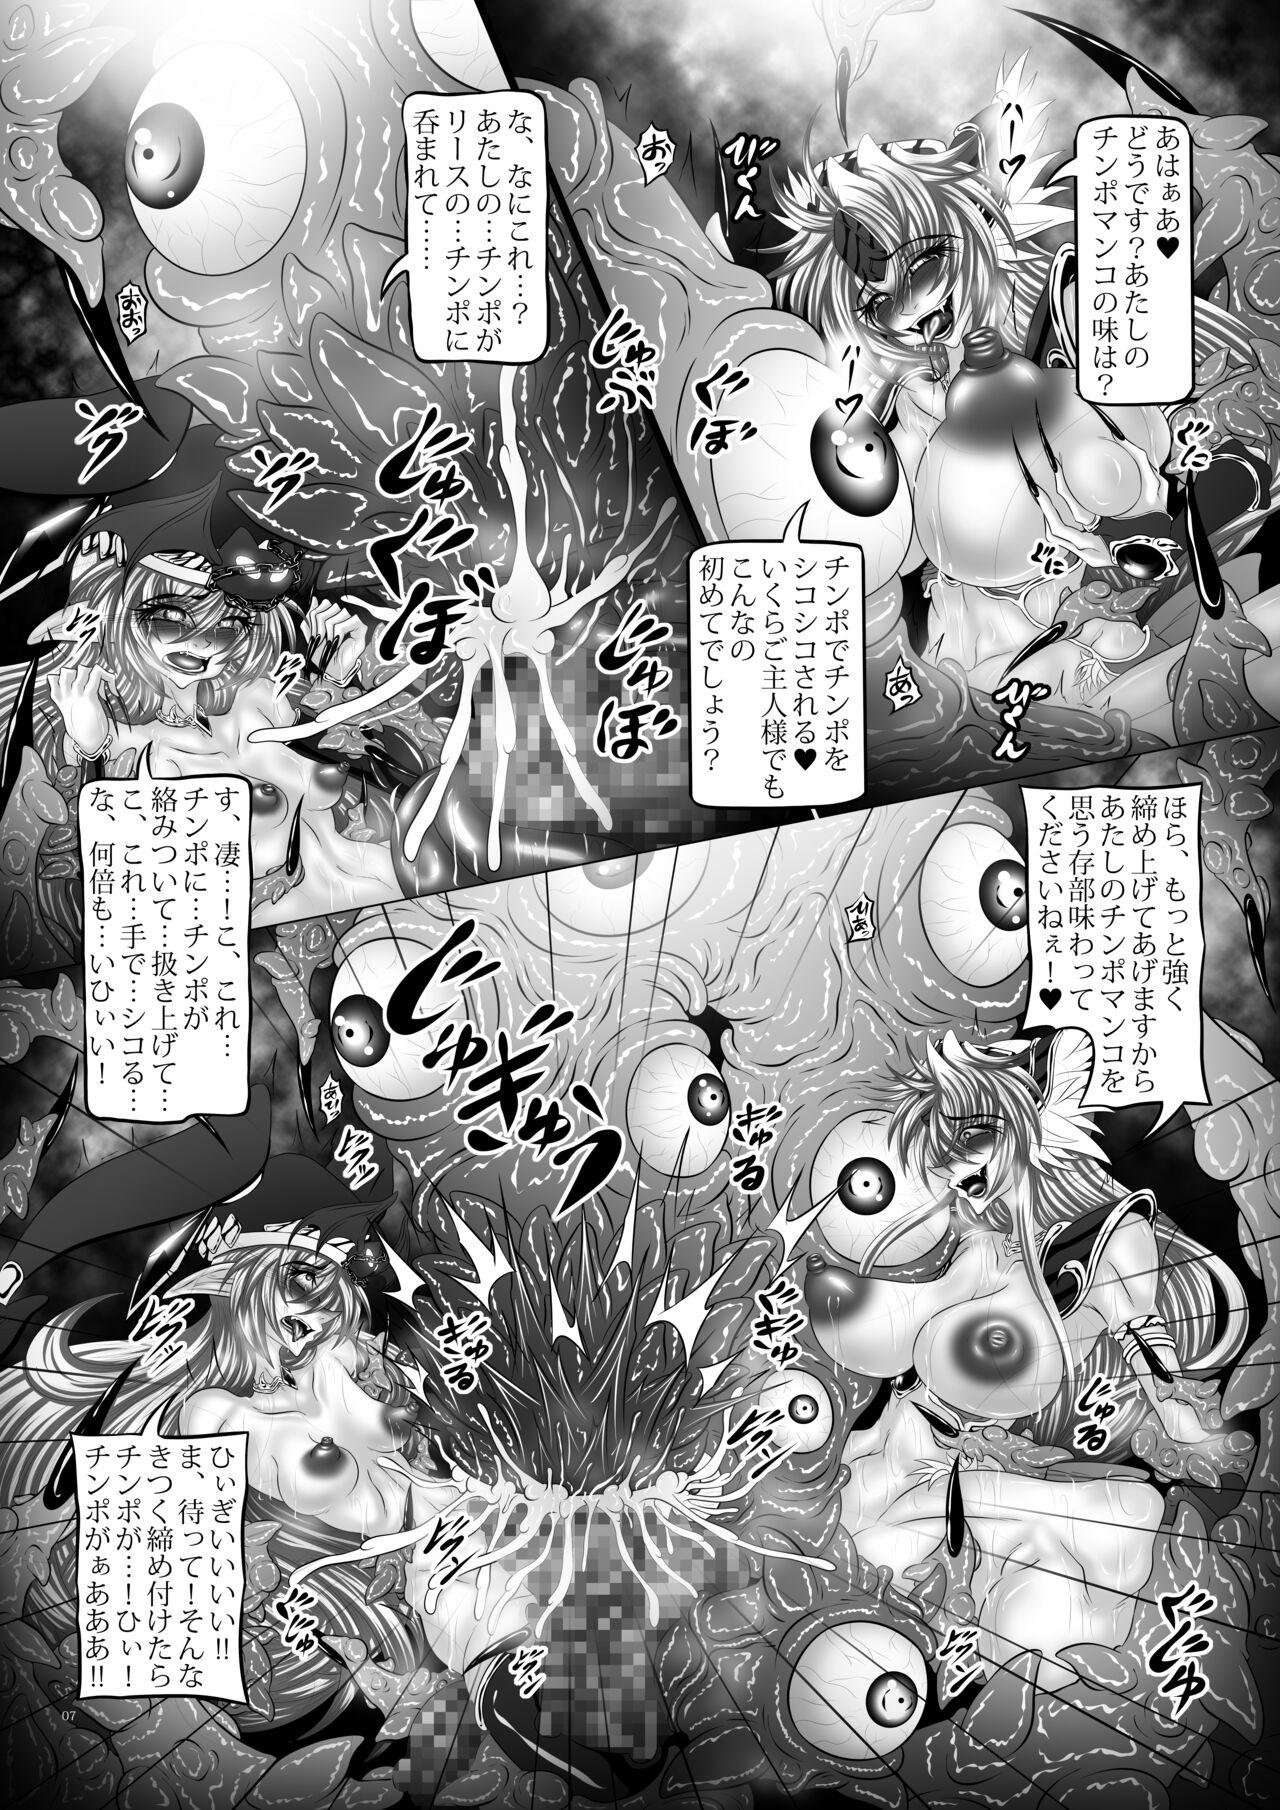 Bigtits Dragon' s Fall V - Seiken densetsu 3 Cartoon - Page 6